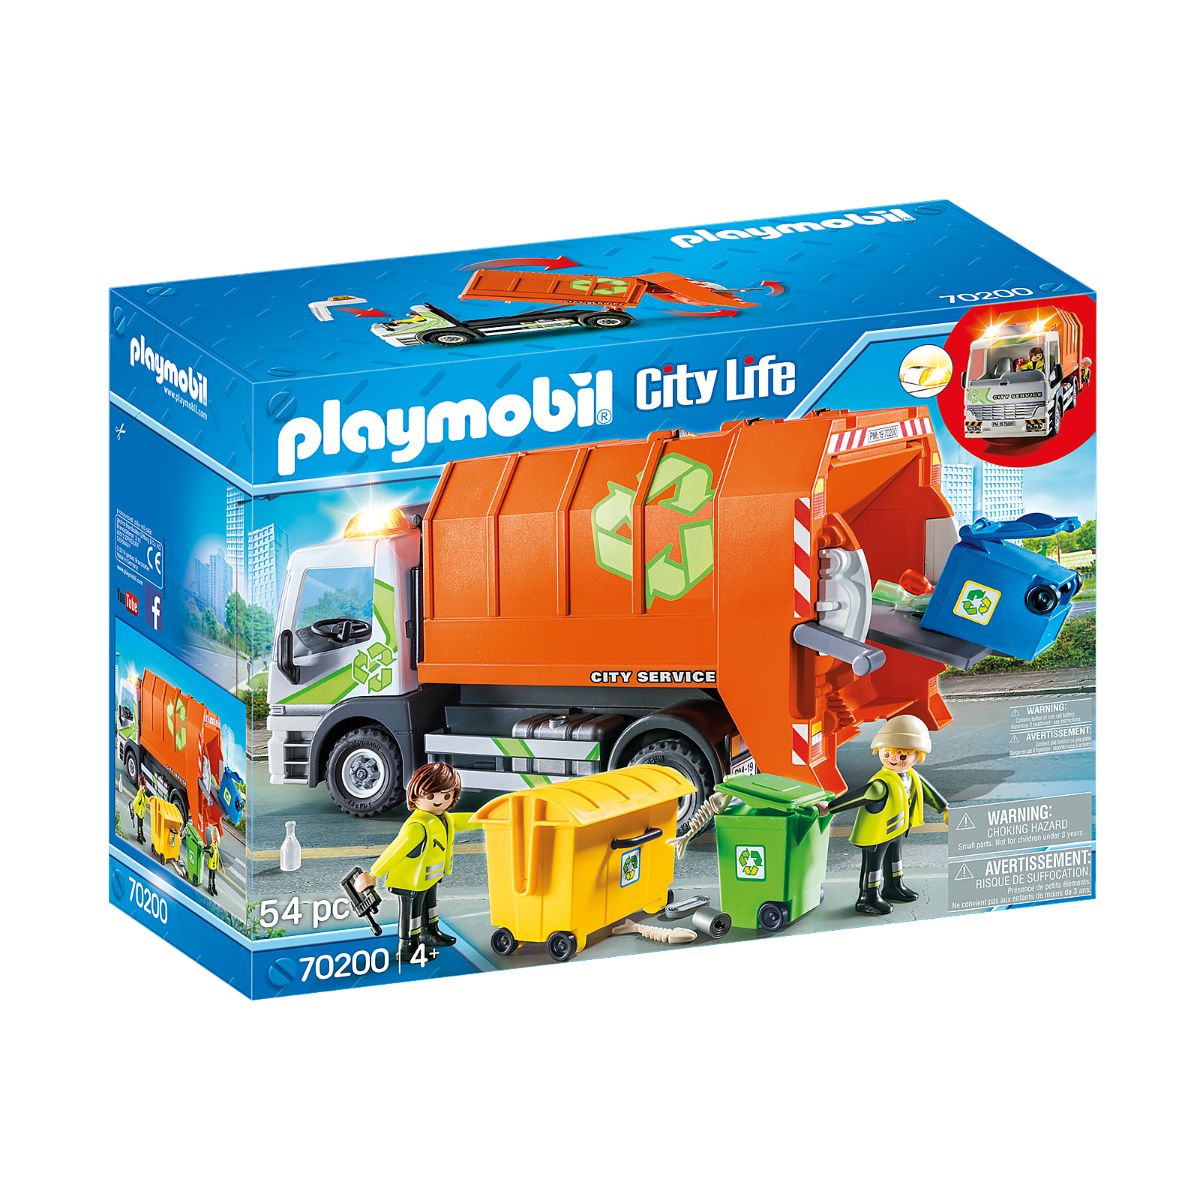 Gentleman friendly Abuse Claim Set Playmobil City Life - Camion de reciclat - Maaco